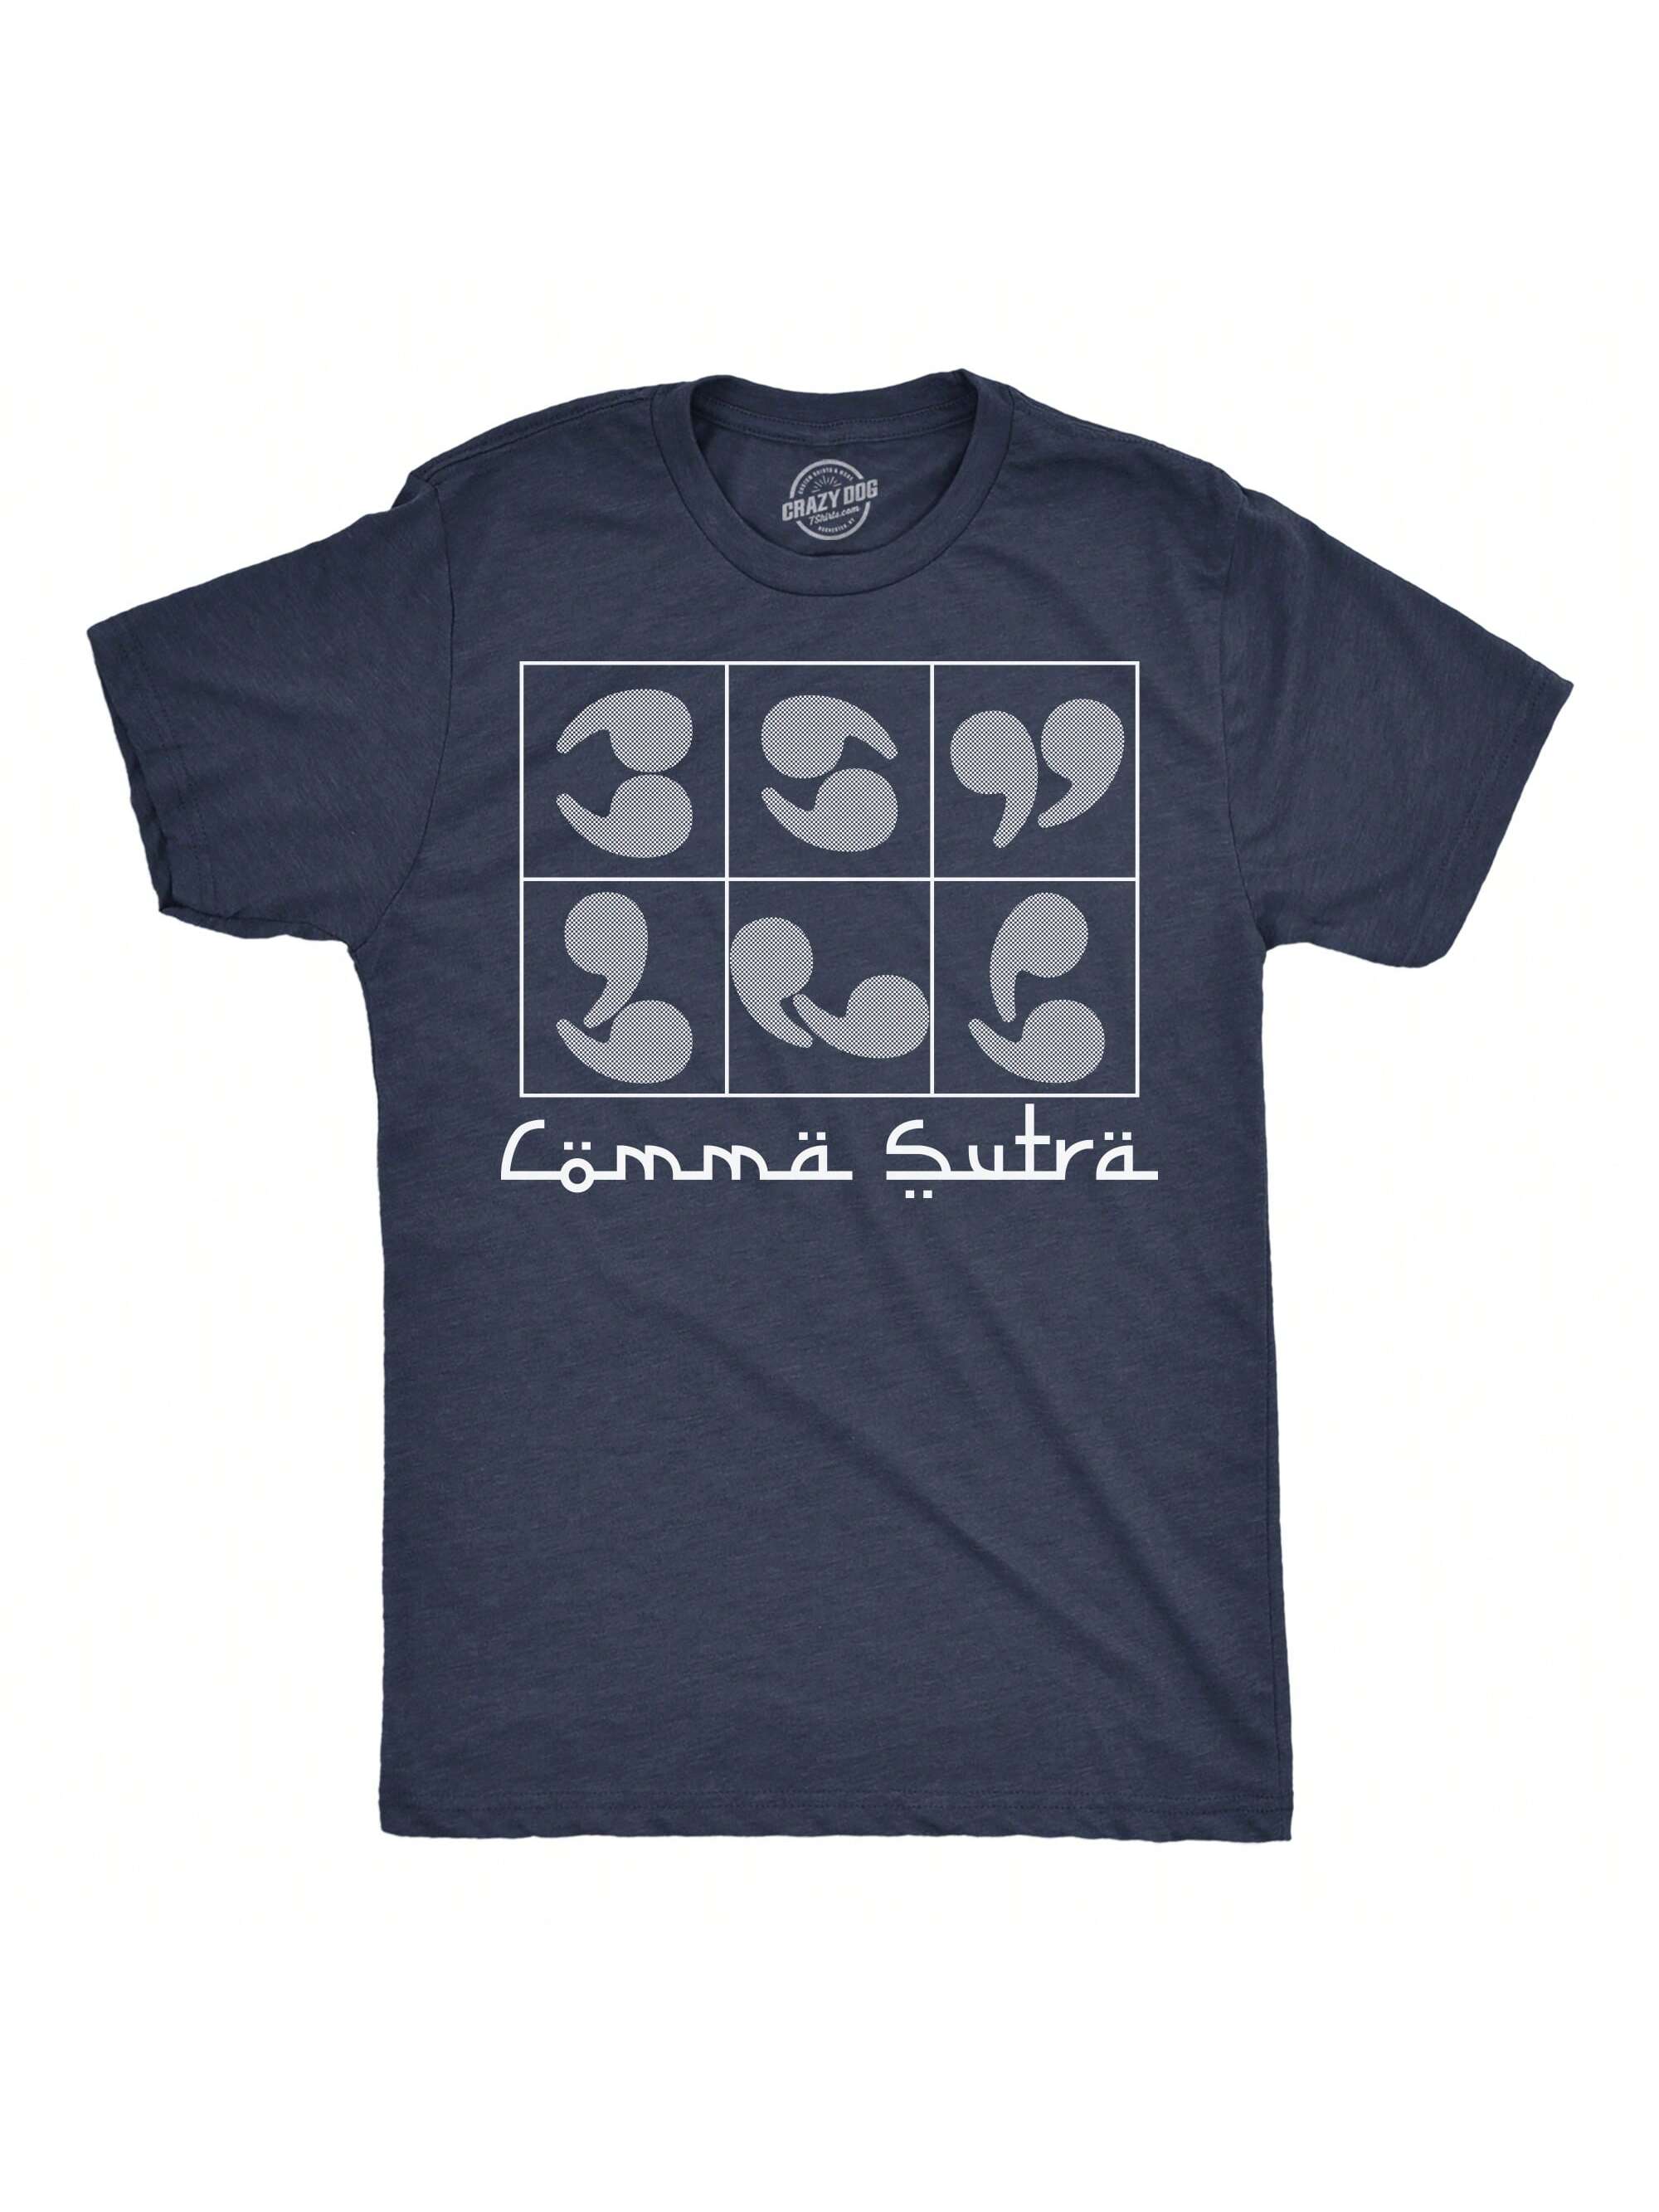 Мужские забавные футболки Comma Sutra саркастическая футболка с рисунком для мужчин (темно-синий Хизер - Comma Sutra) - L, хизер вмс - запятая сутра